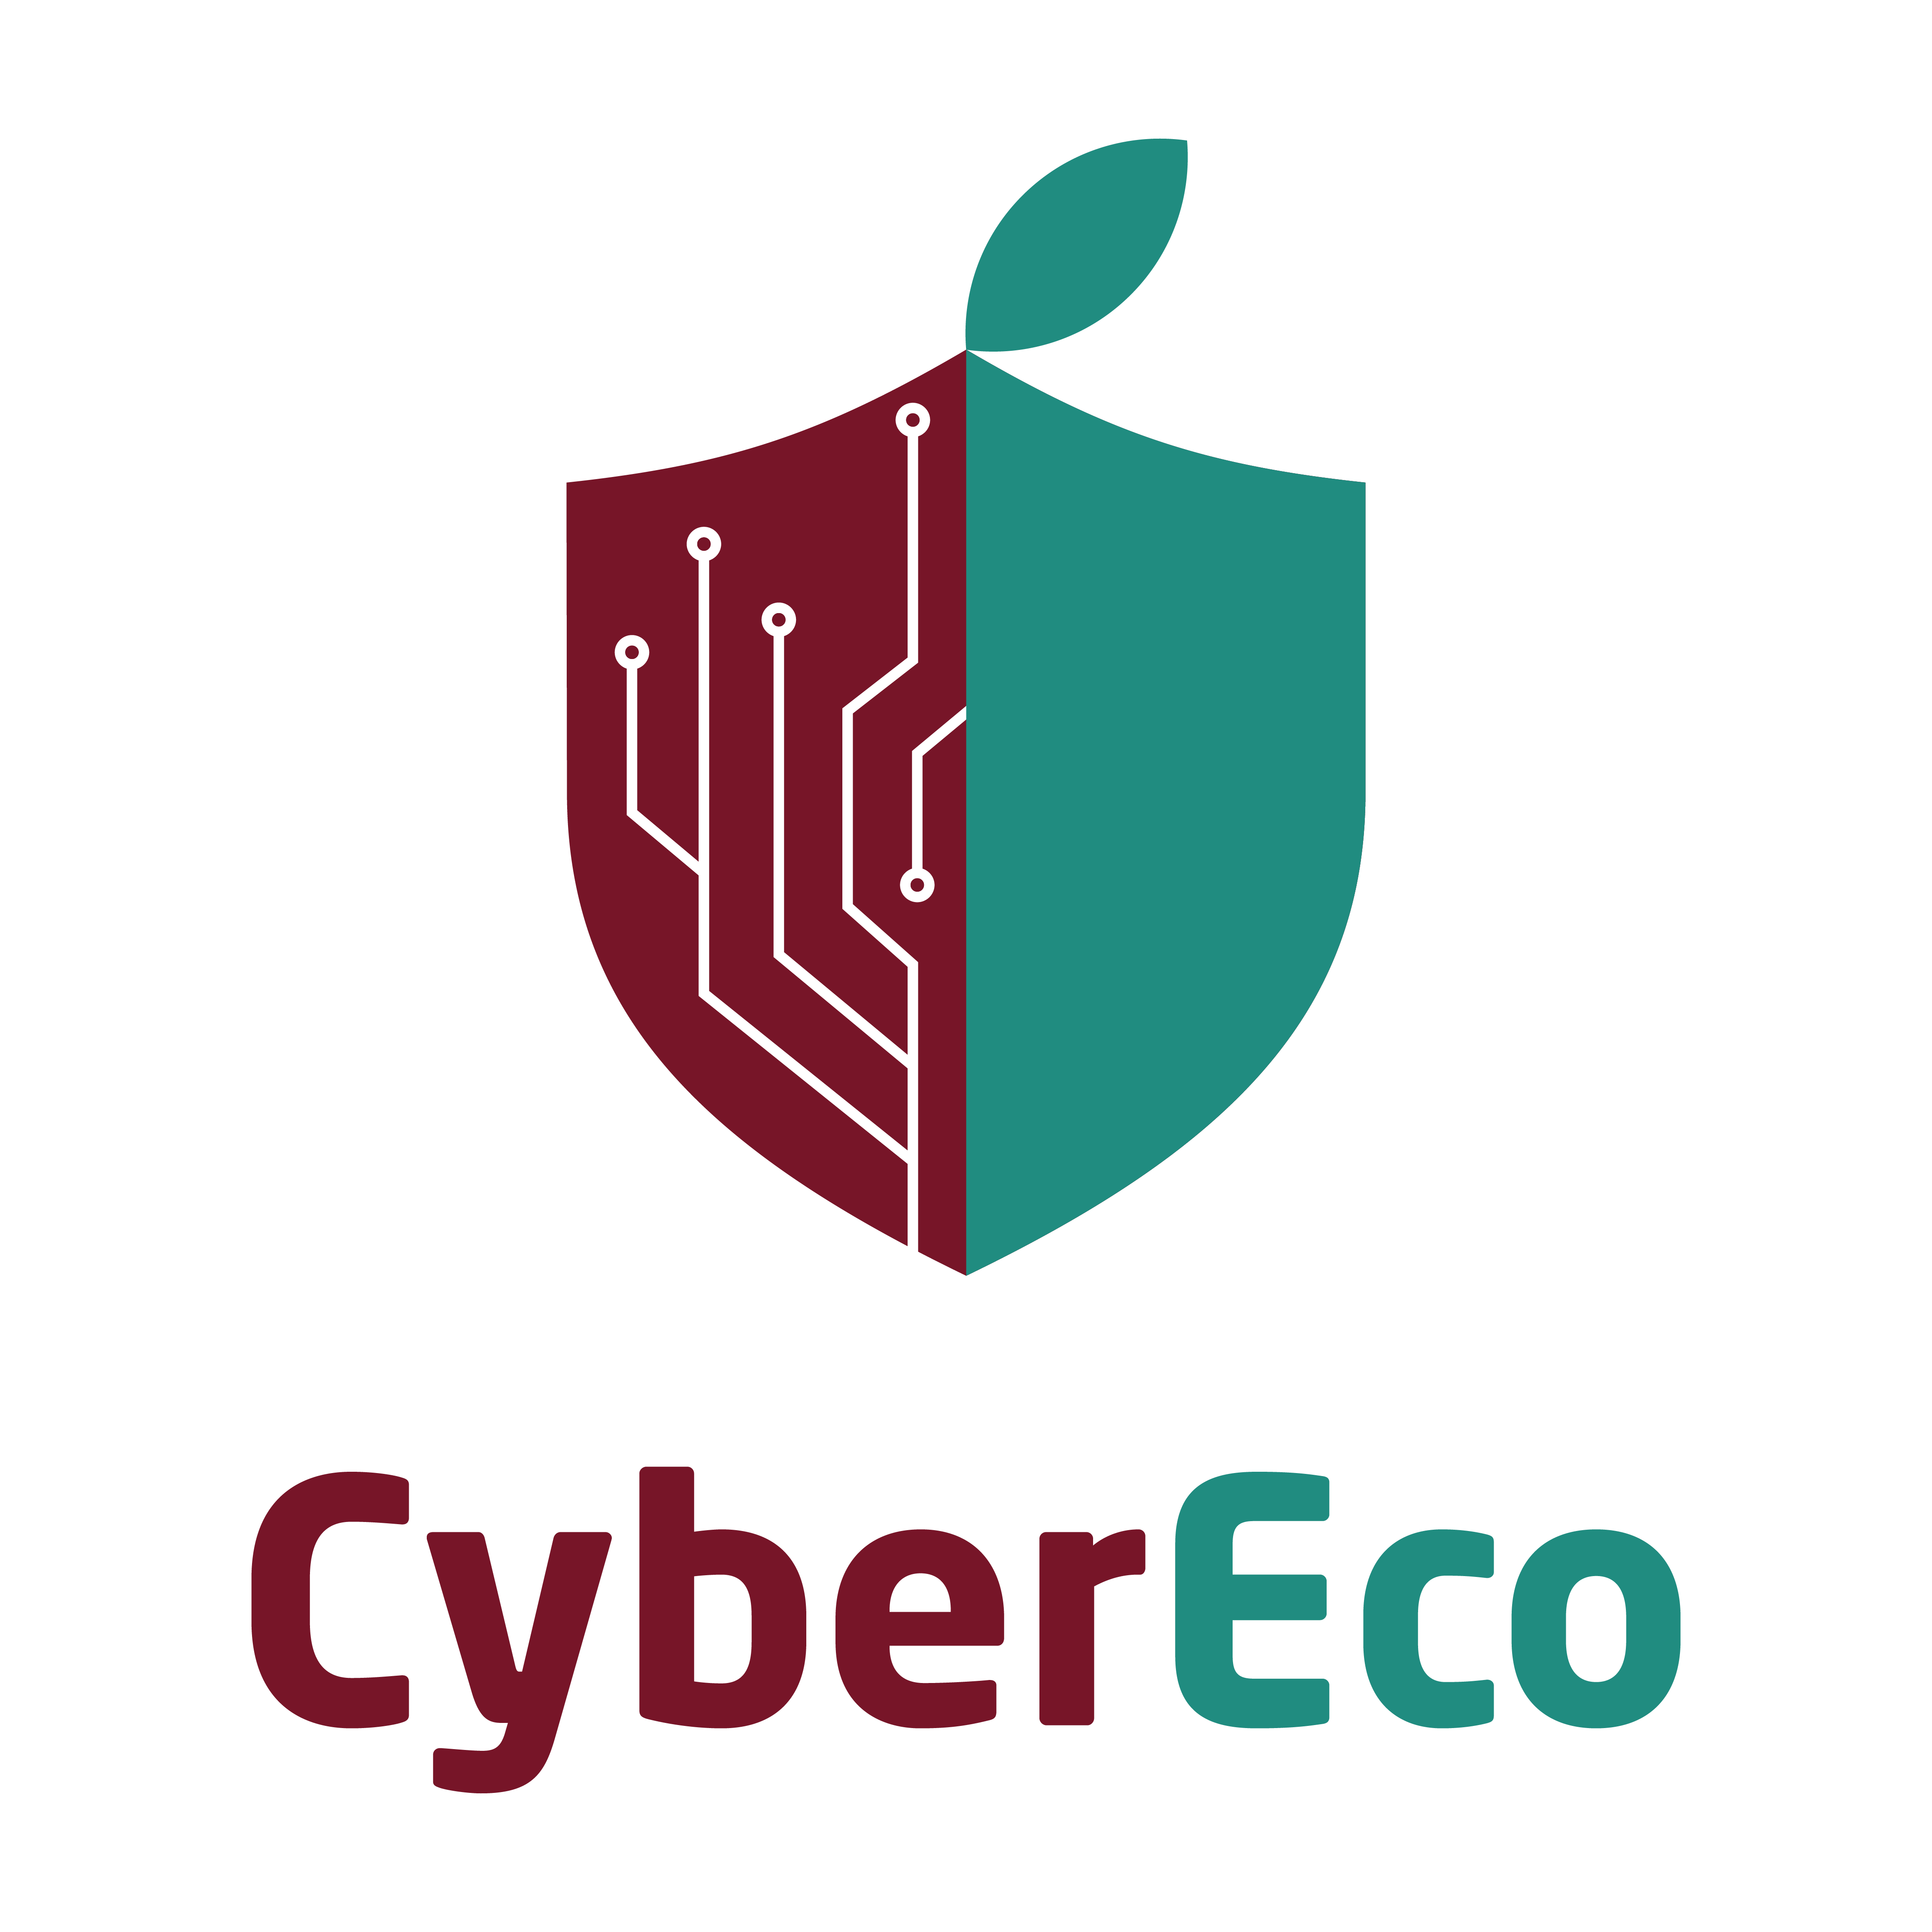 Cyber Eco Logo